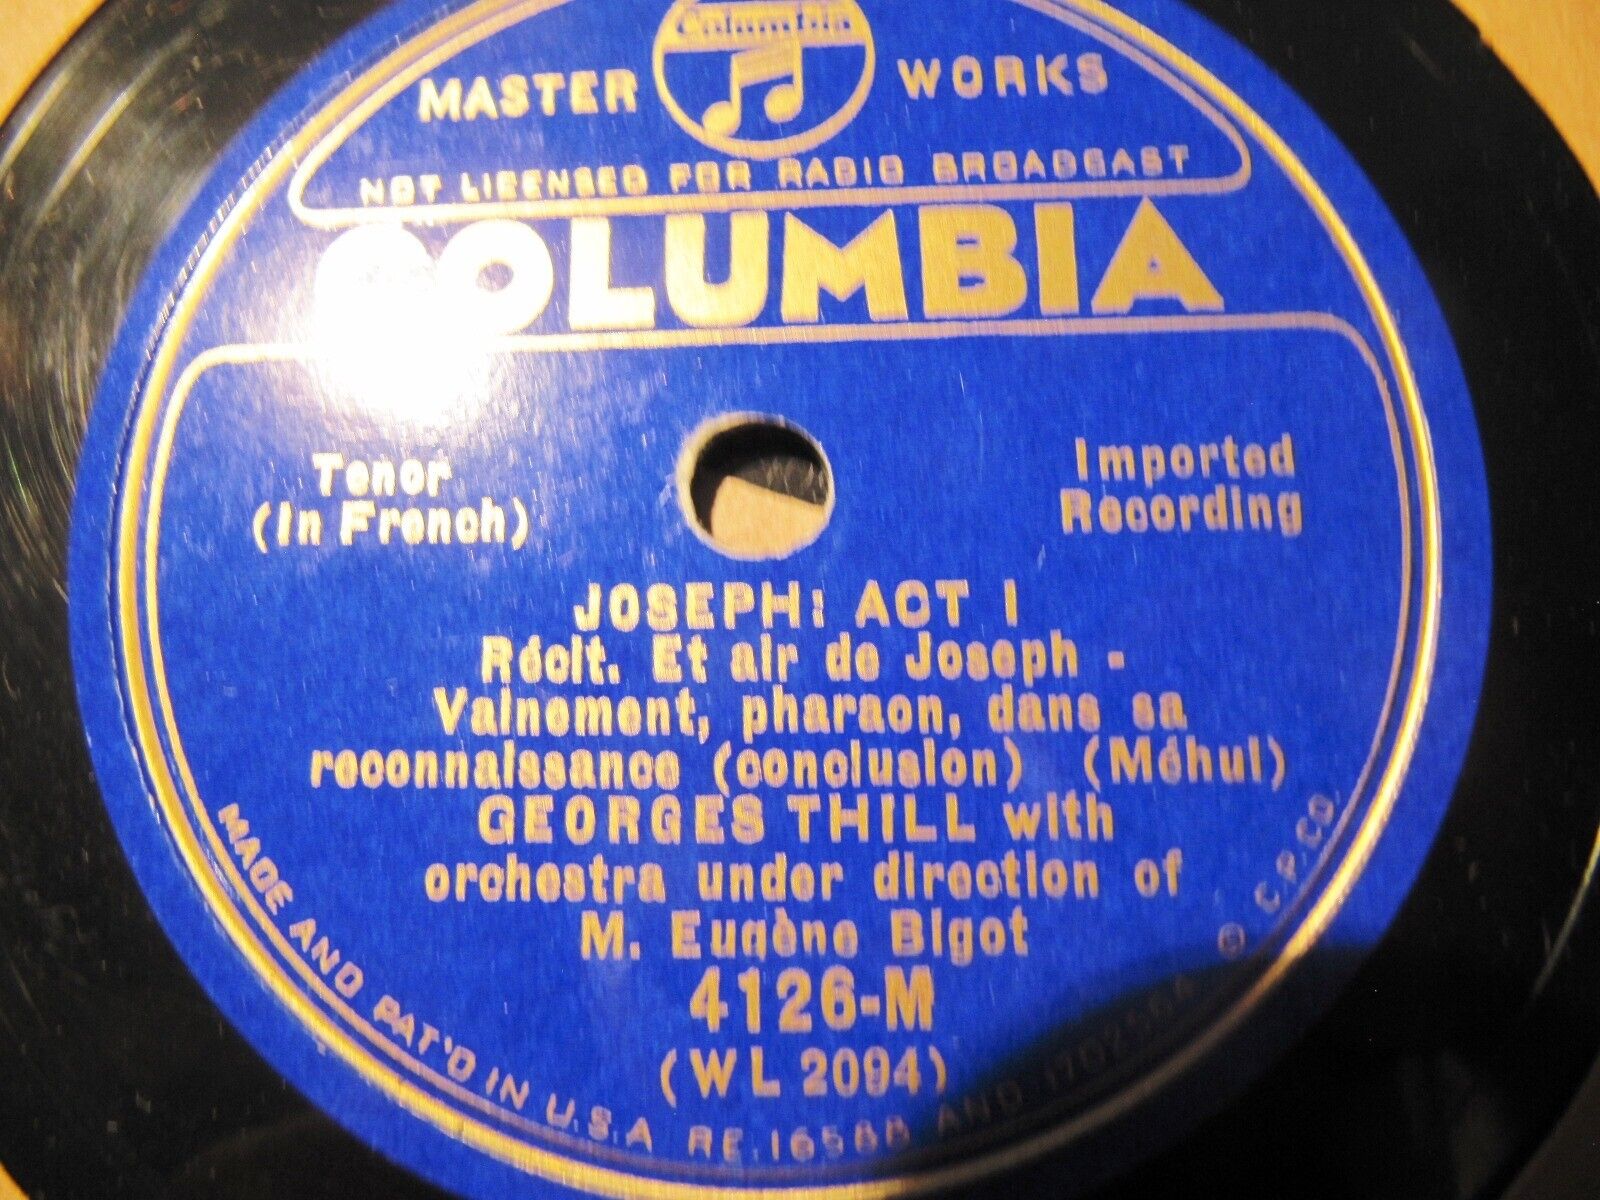 1932 GEORGES THILL tenor Mehul JOSEPH Vainement Pharaon BIGOT COLUMBIA 4126-M